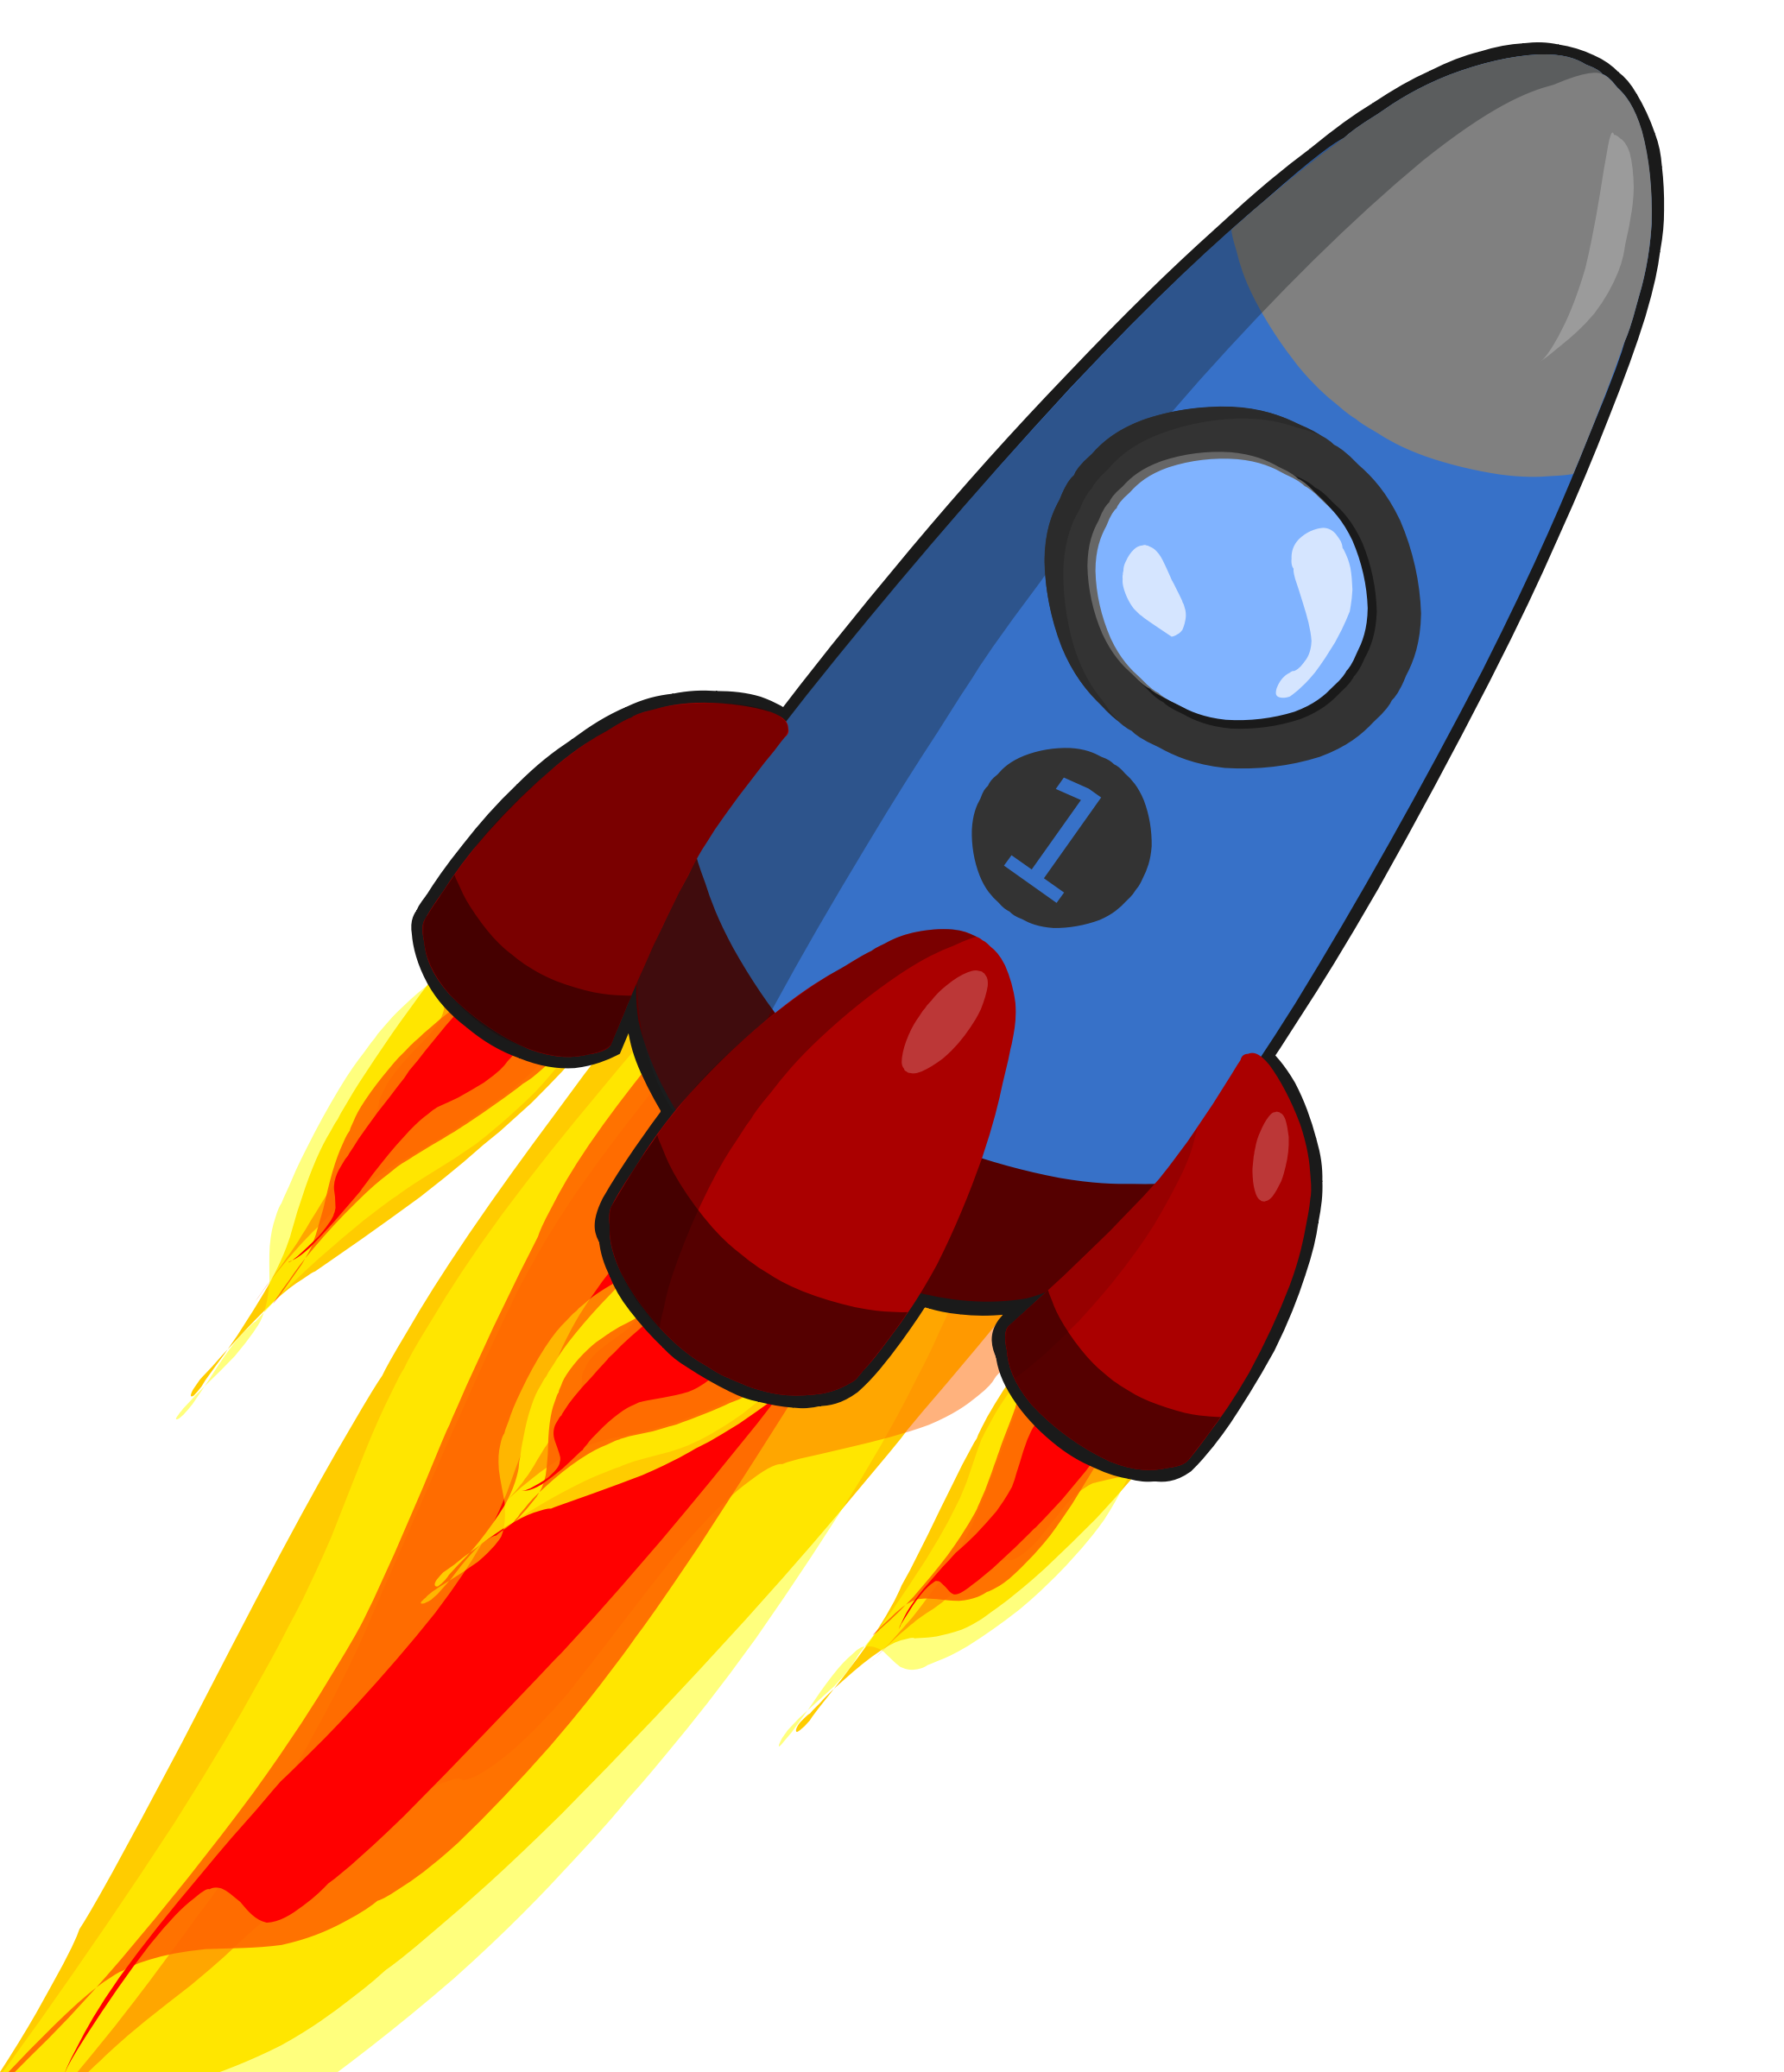 A Cartoon Of A Rocket Ship